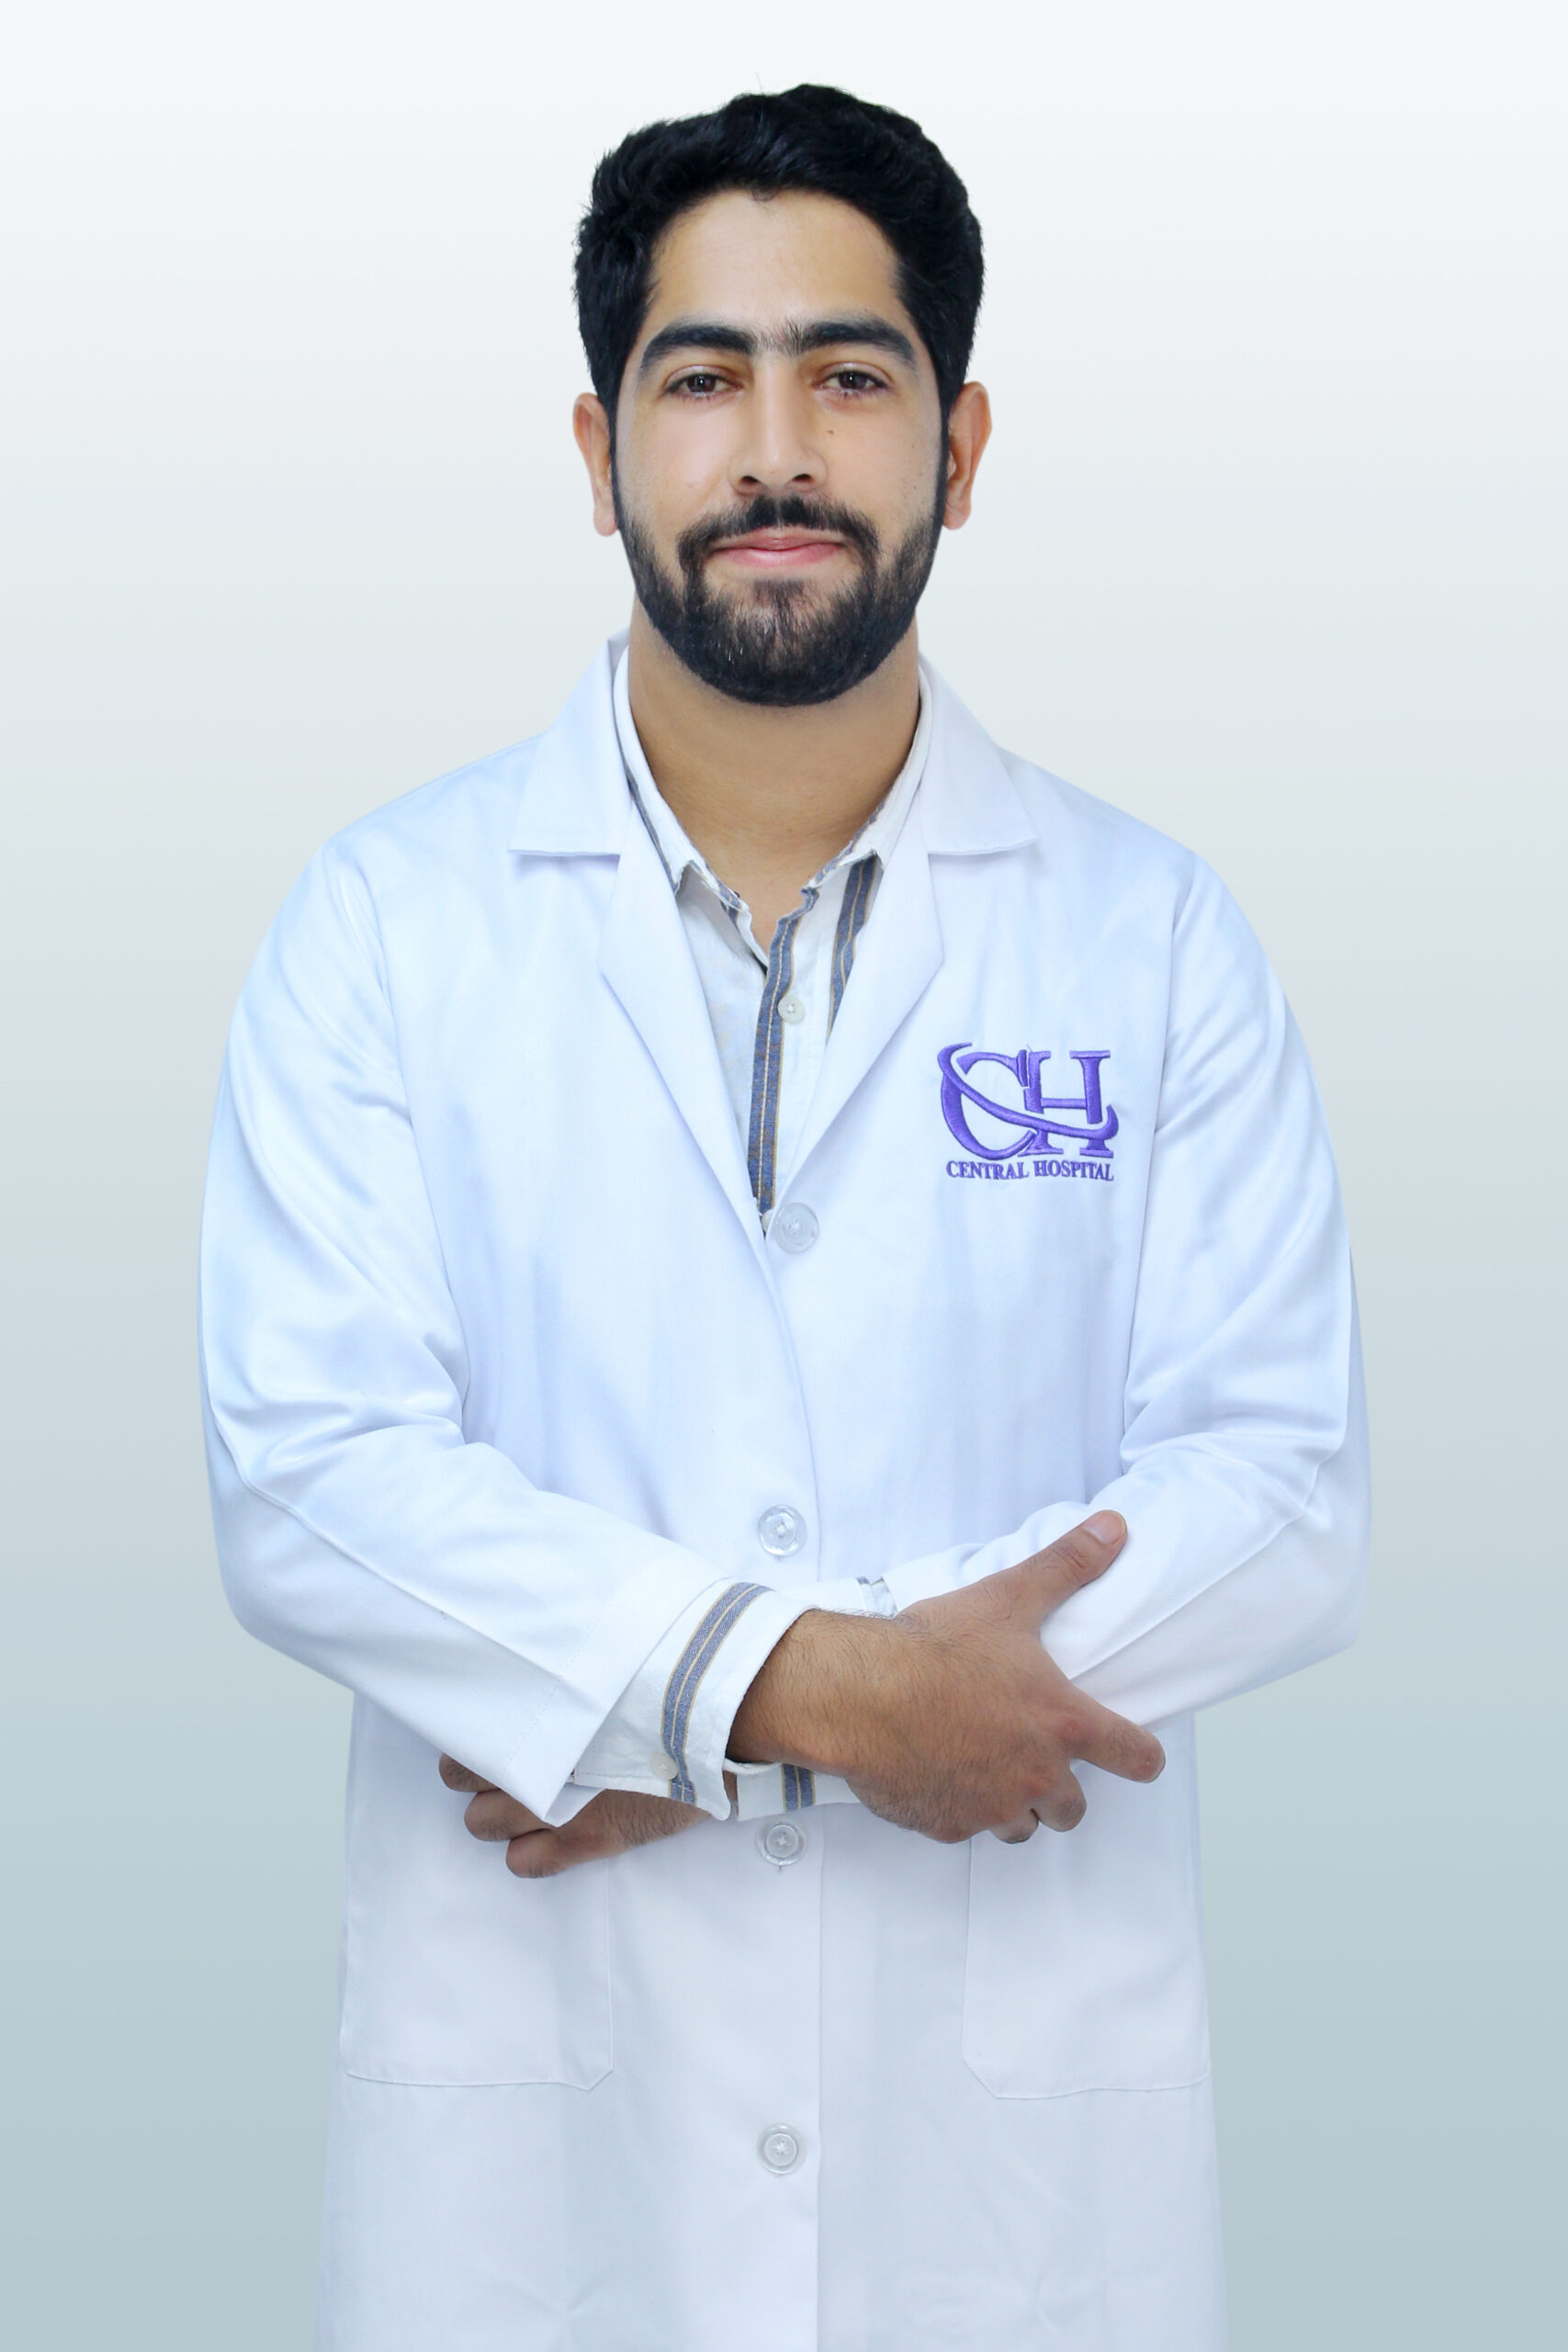 Dr. Burhan Altaf Misgar